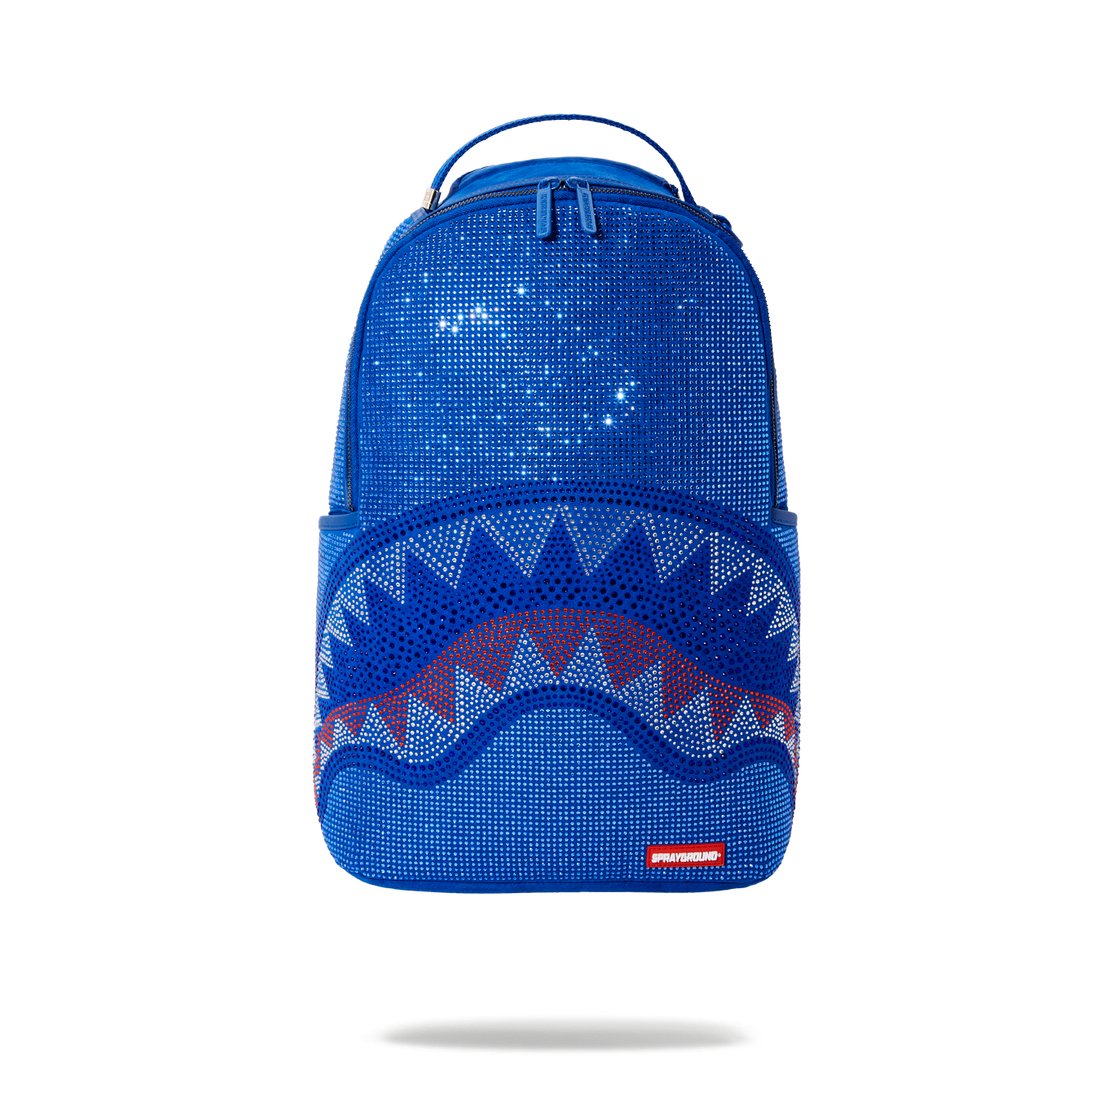 Backpacks Sprayground - Trinity Shark rhinestones backpack in grey